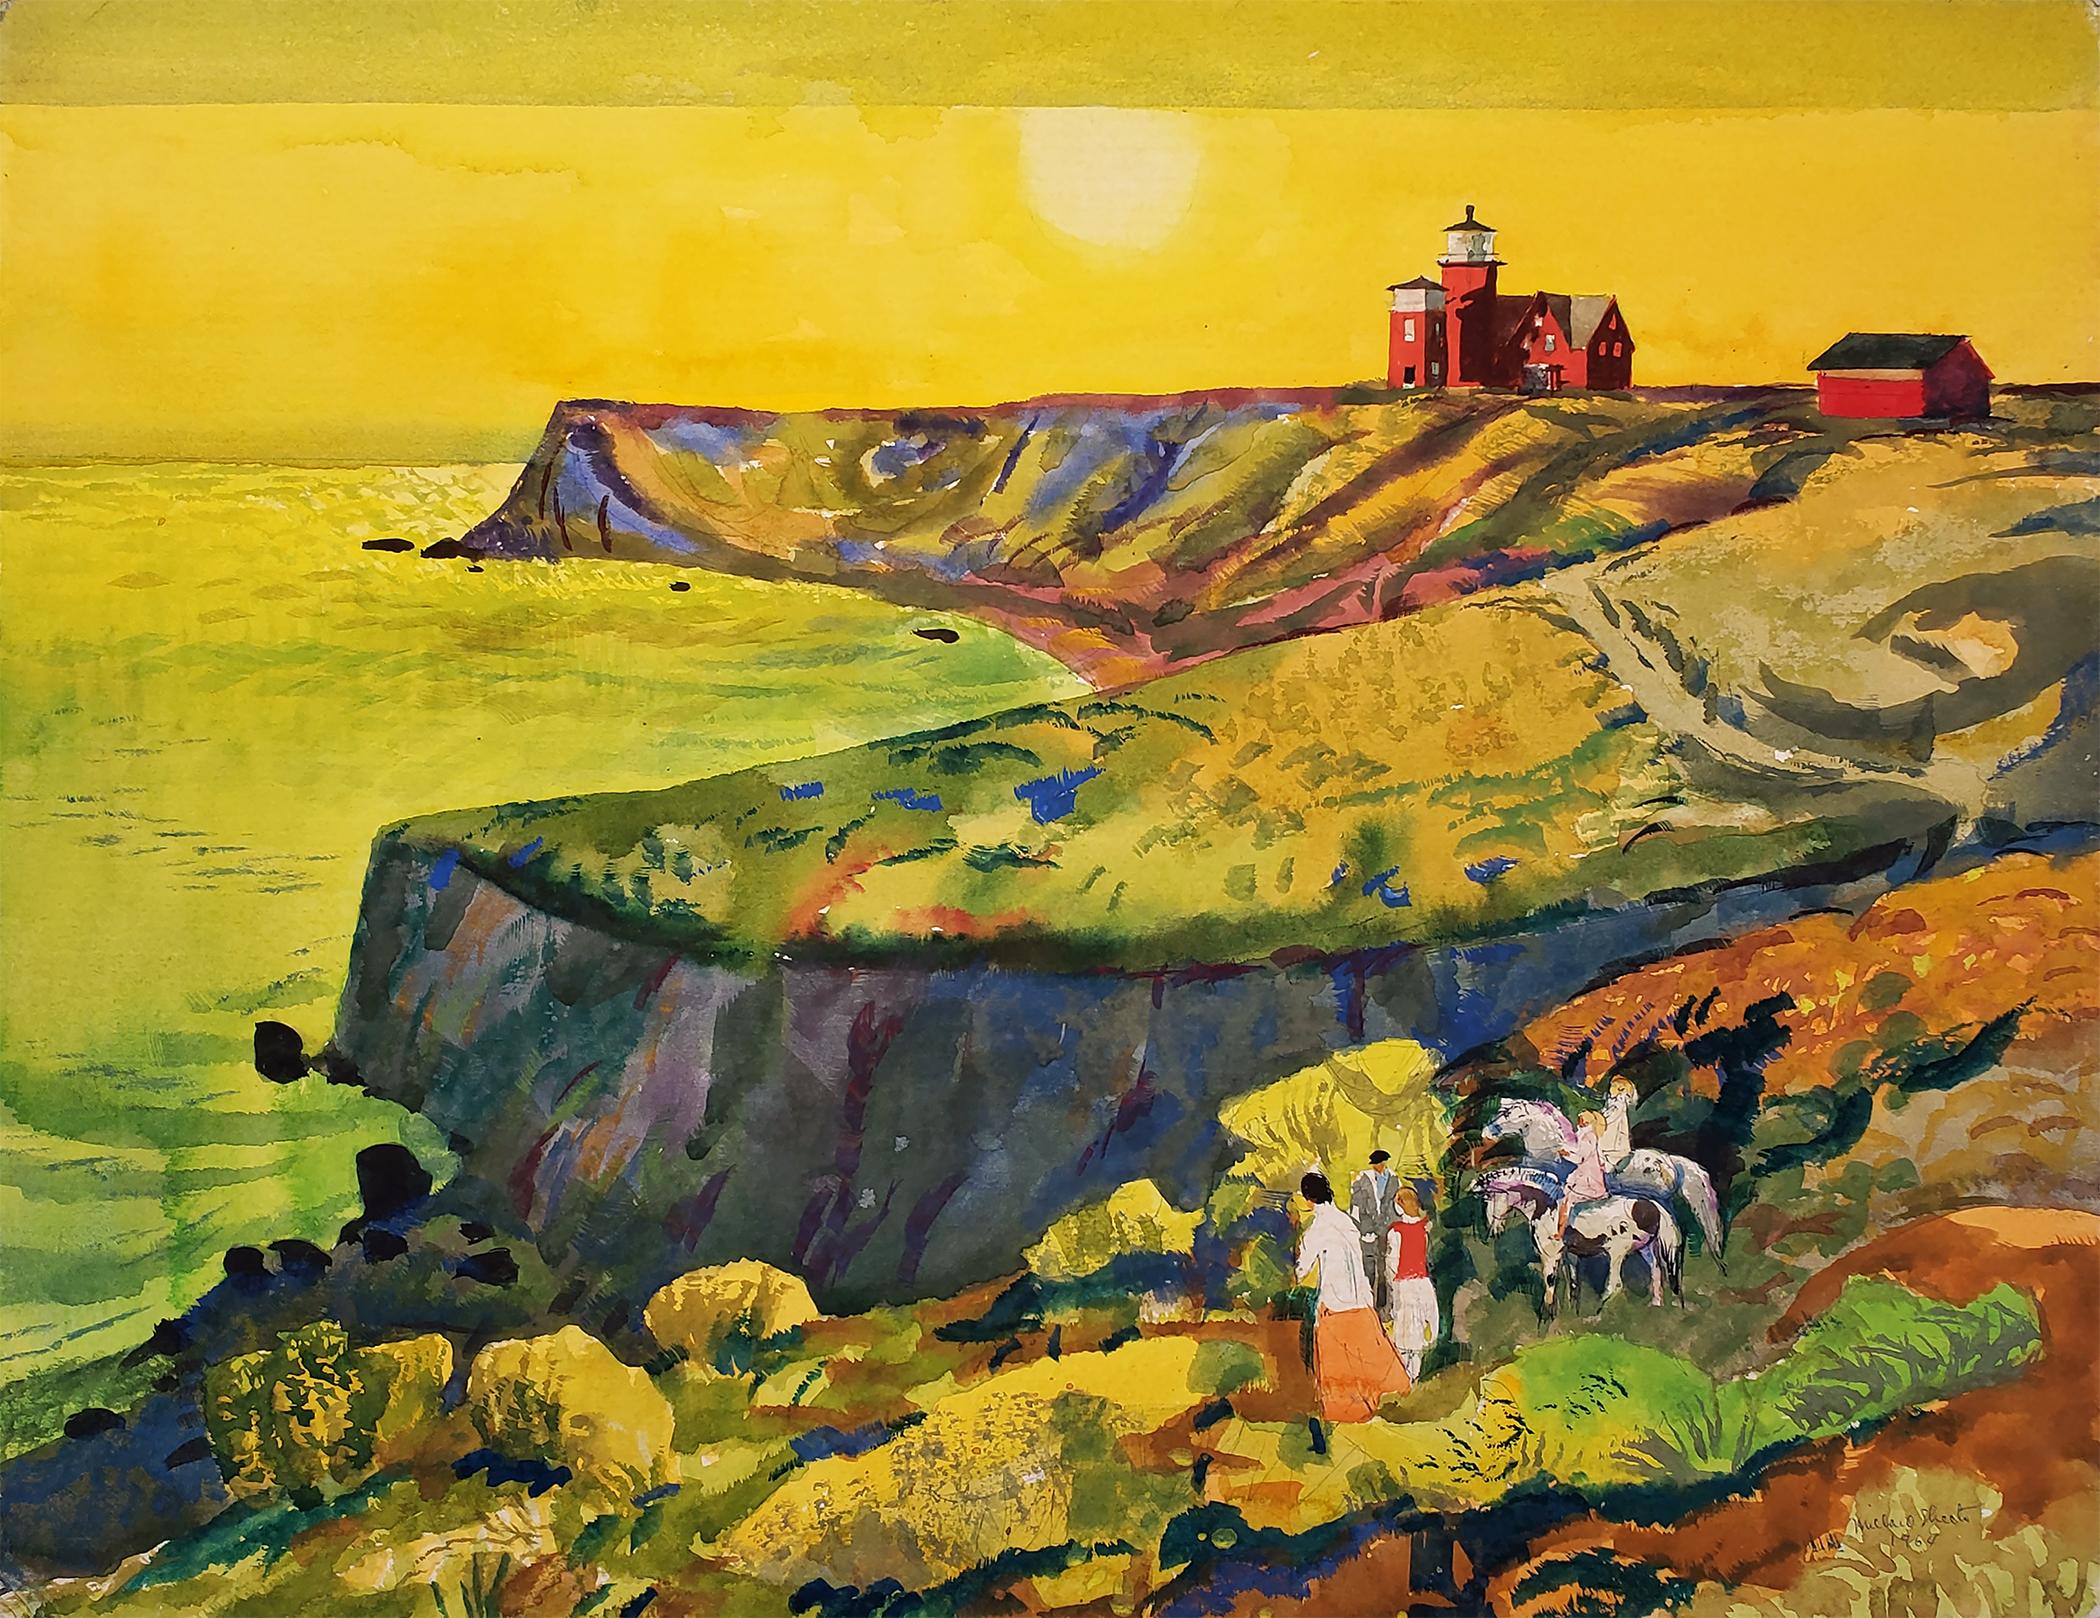 Summertime - Martha's Vineyard  - Sunset Golden Sky and Red Lighthouse 